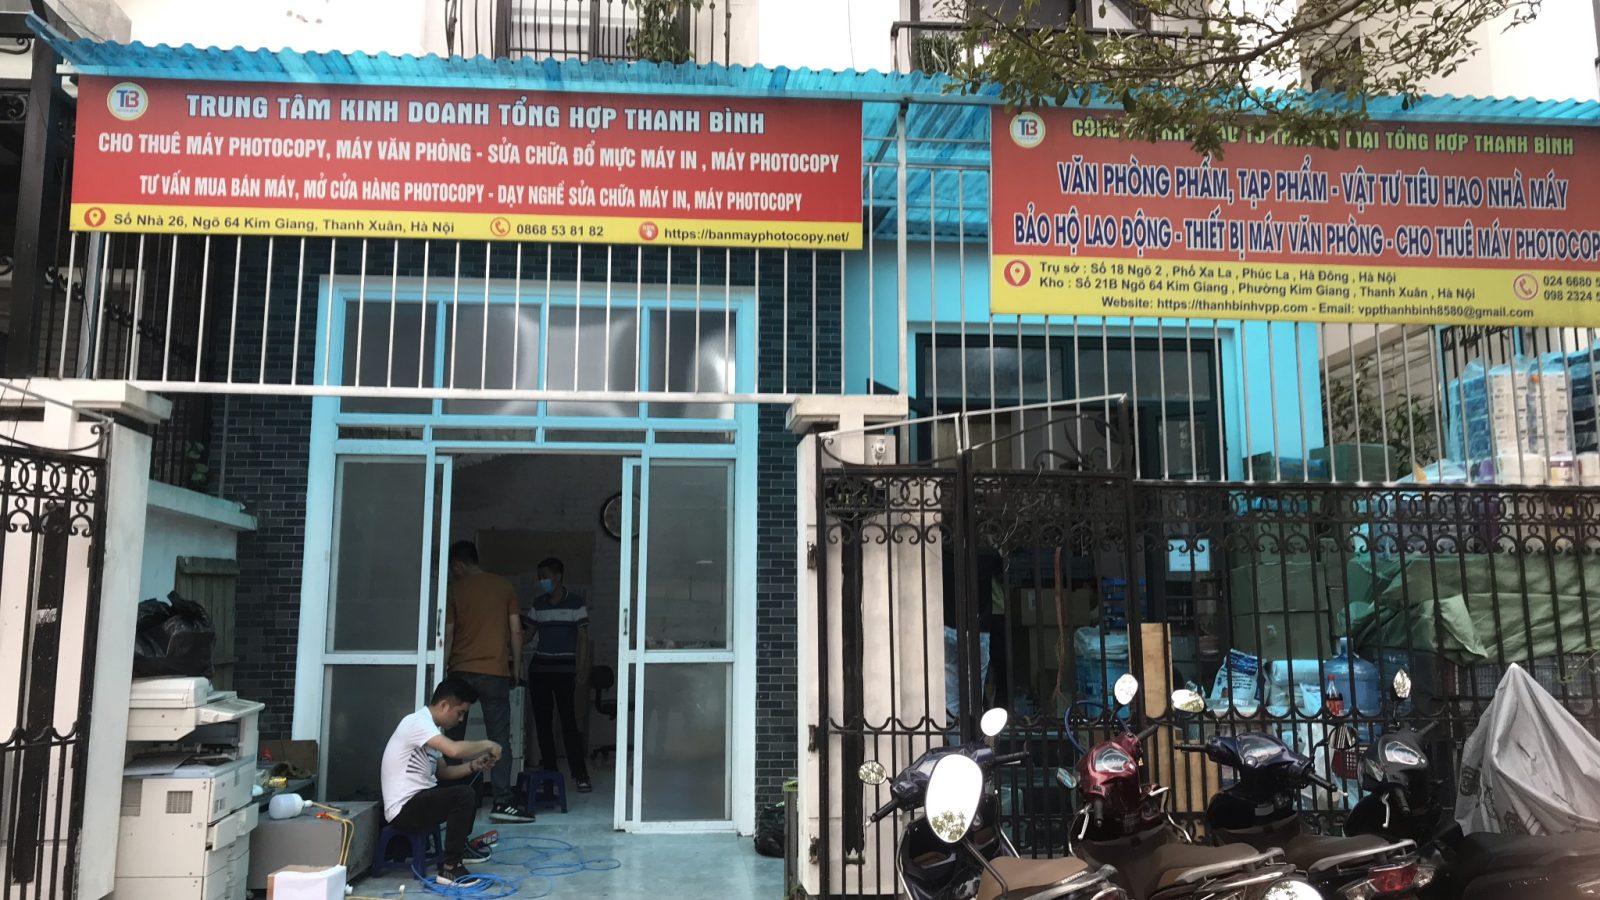 Bán máy photocopy giá rẻ tại Hà Nội - Kho máy photocopy giá sỉ